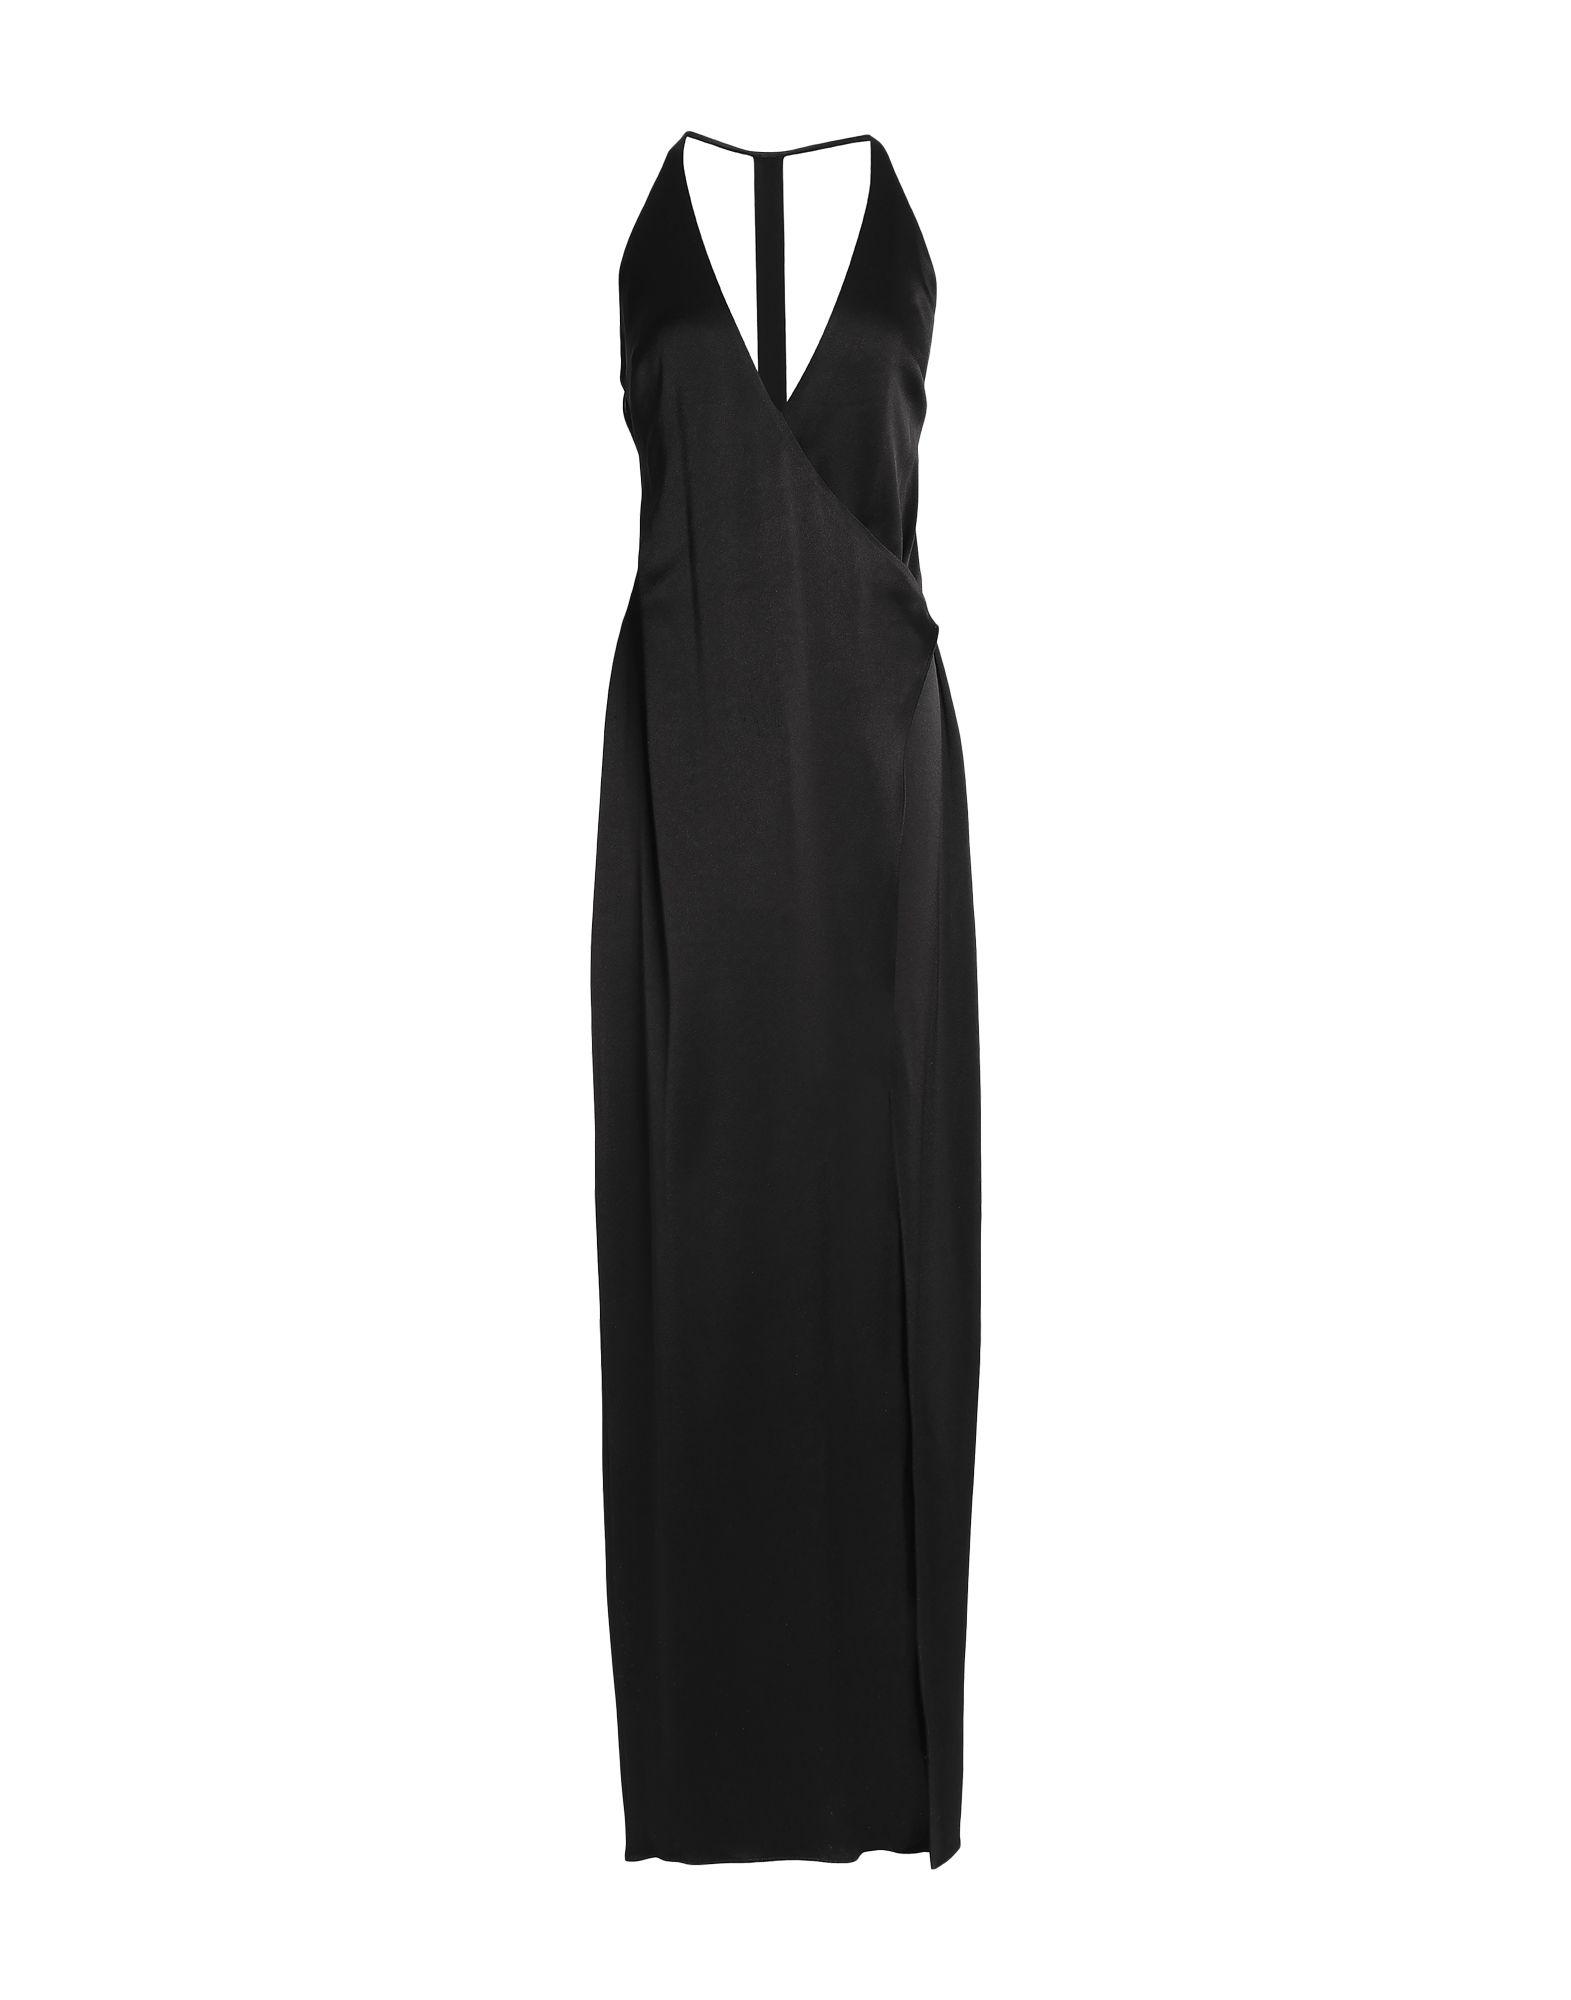 Halston Satin Long Dress in Black - Lyst